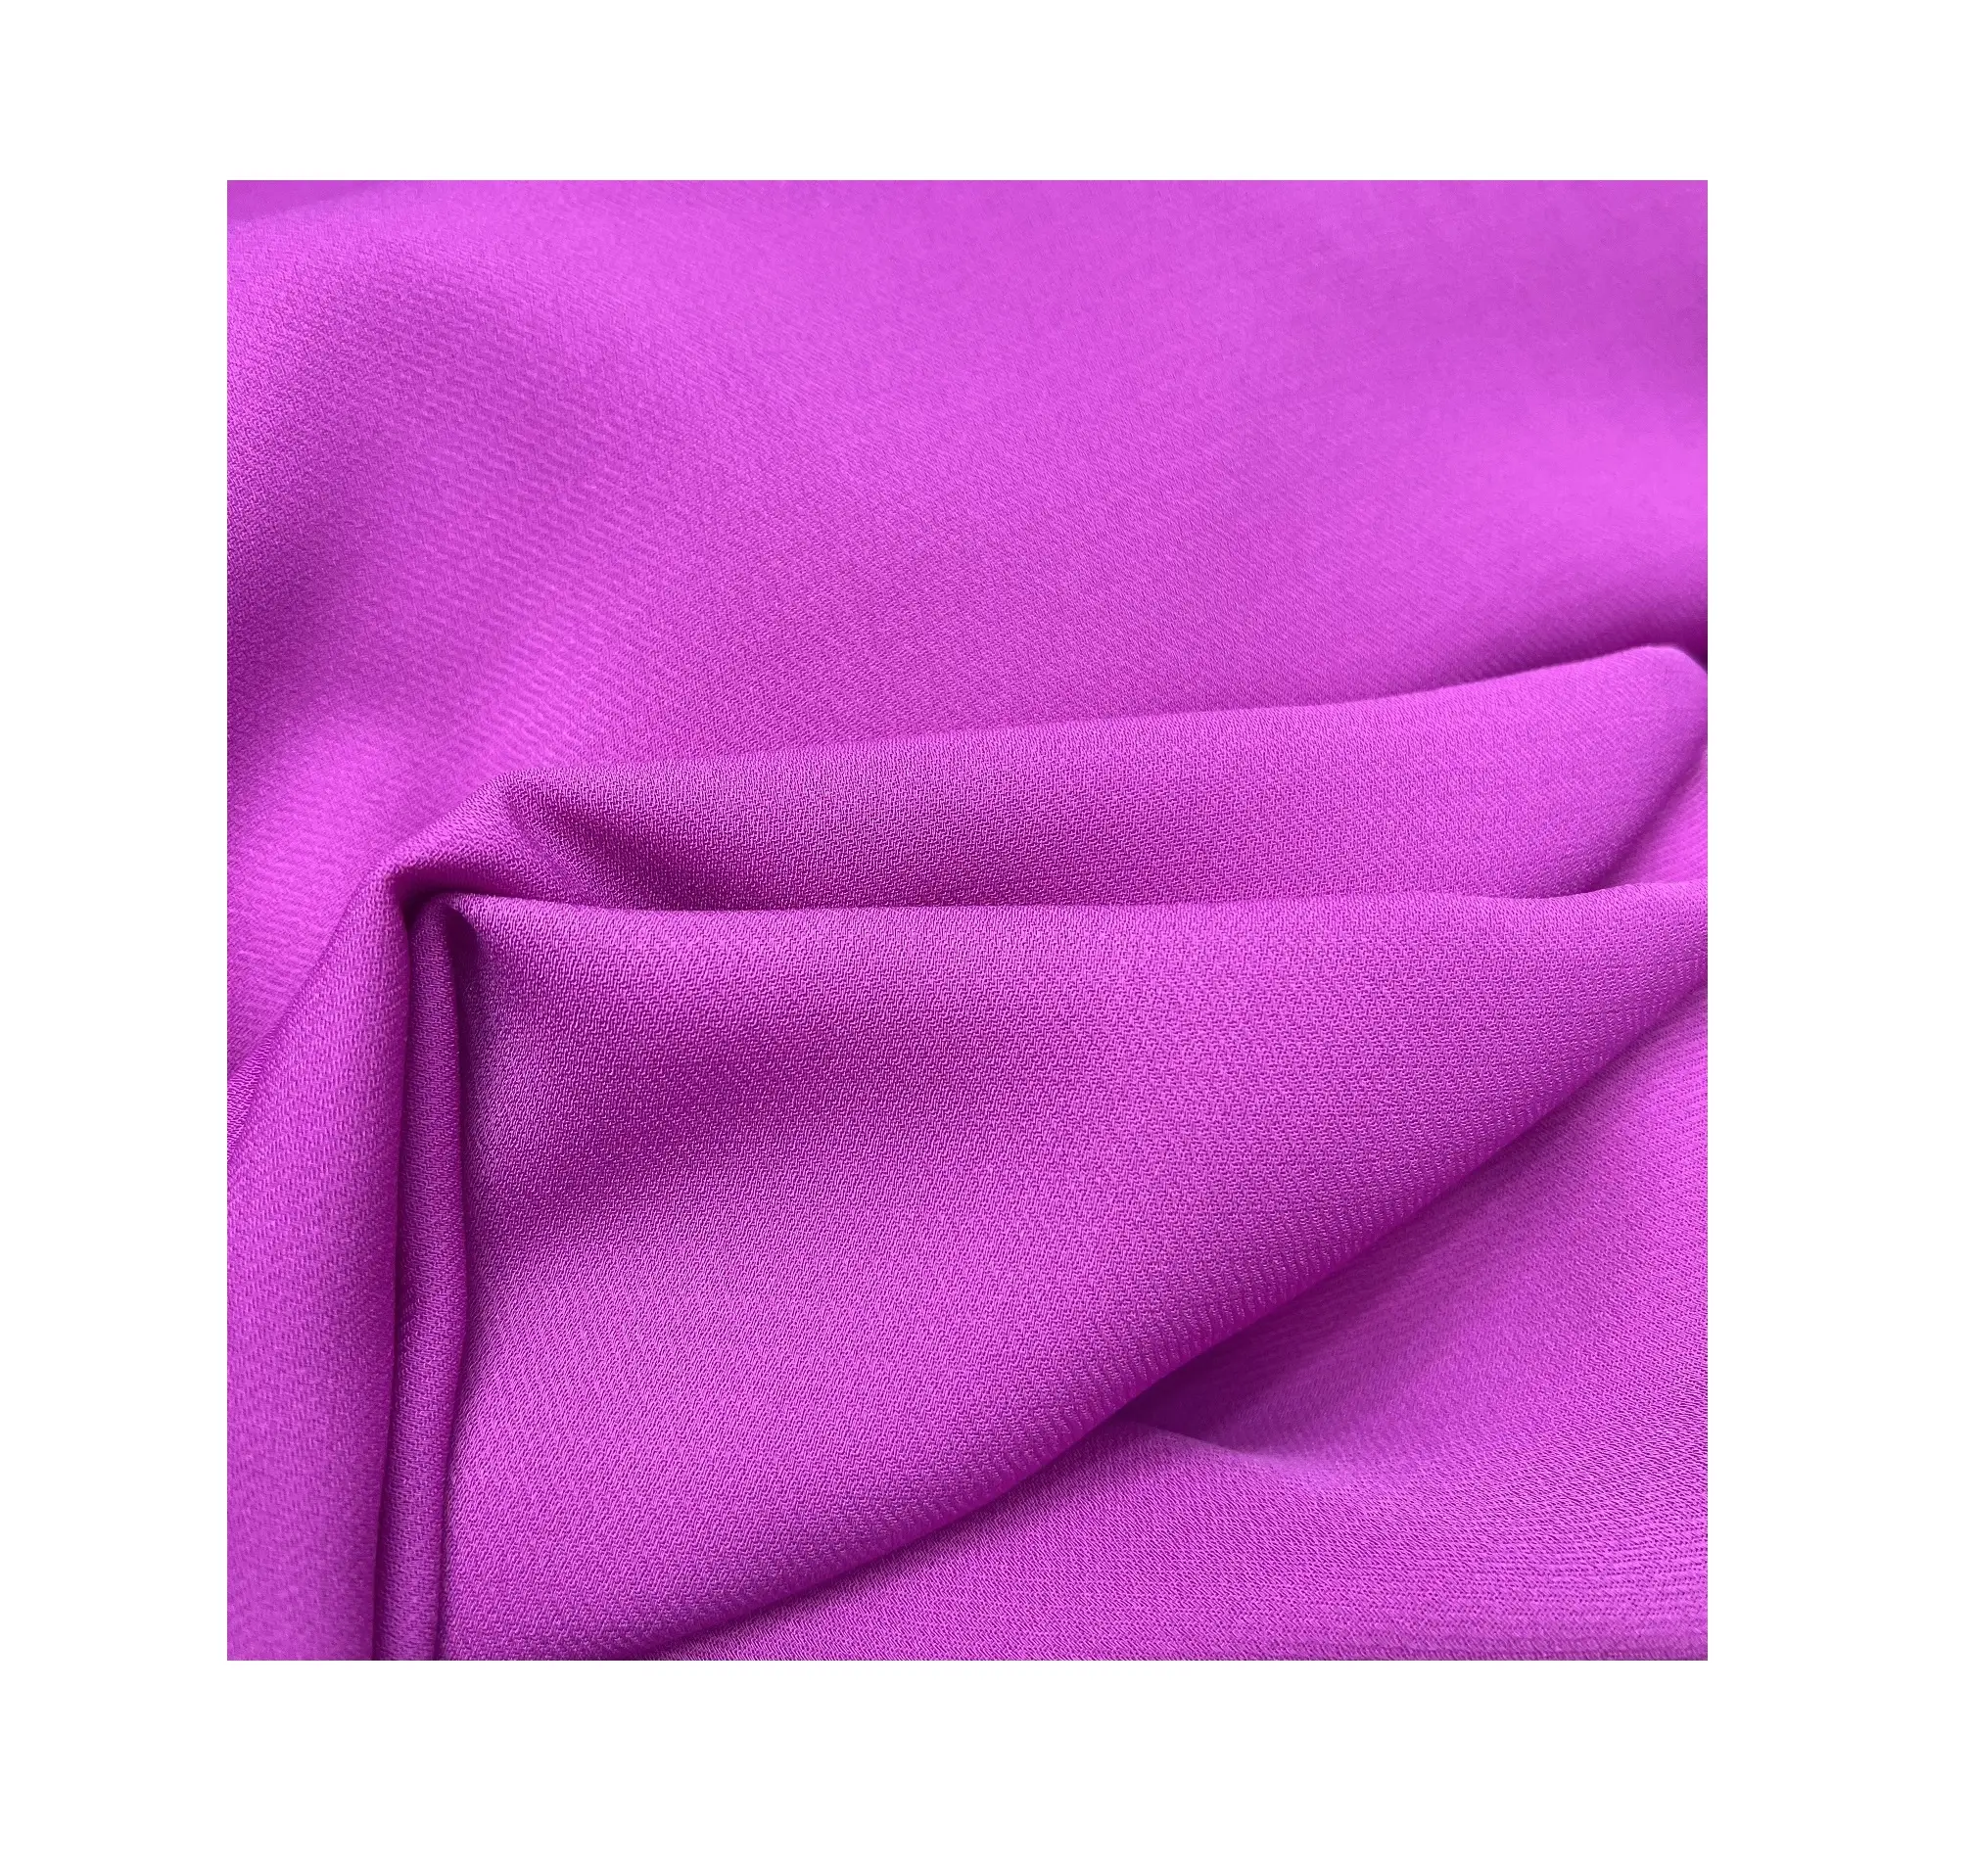 Hot Pink crepe satin chiffon fabric for dress robe